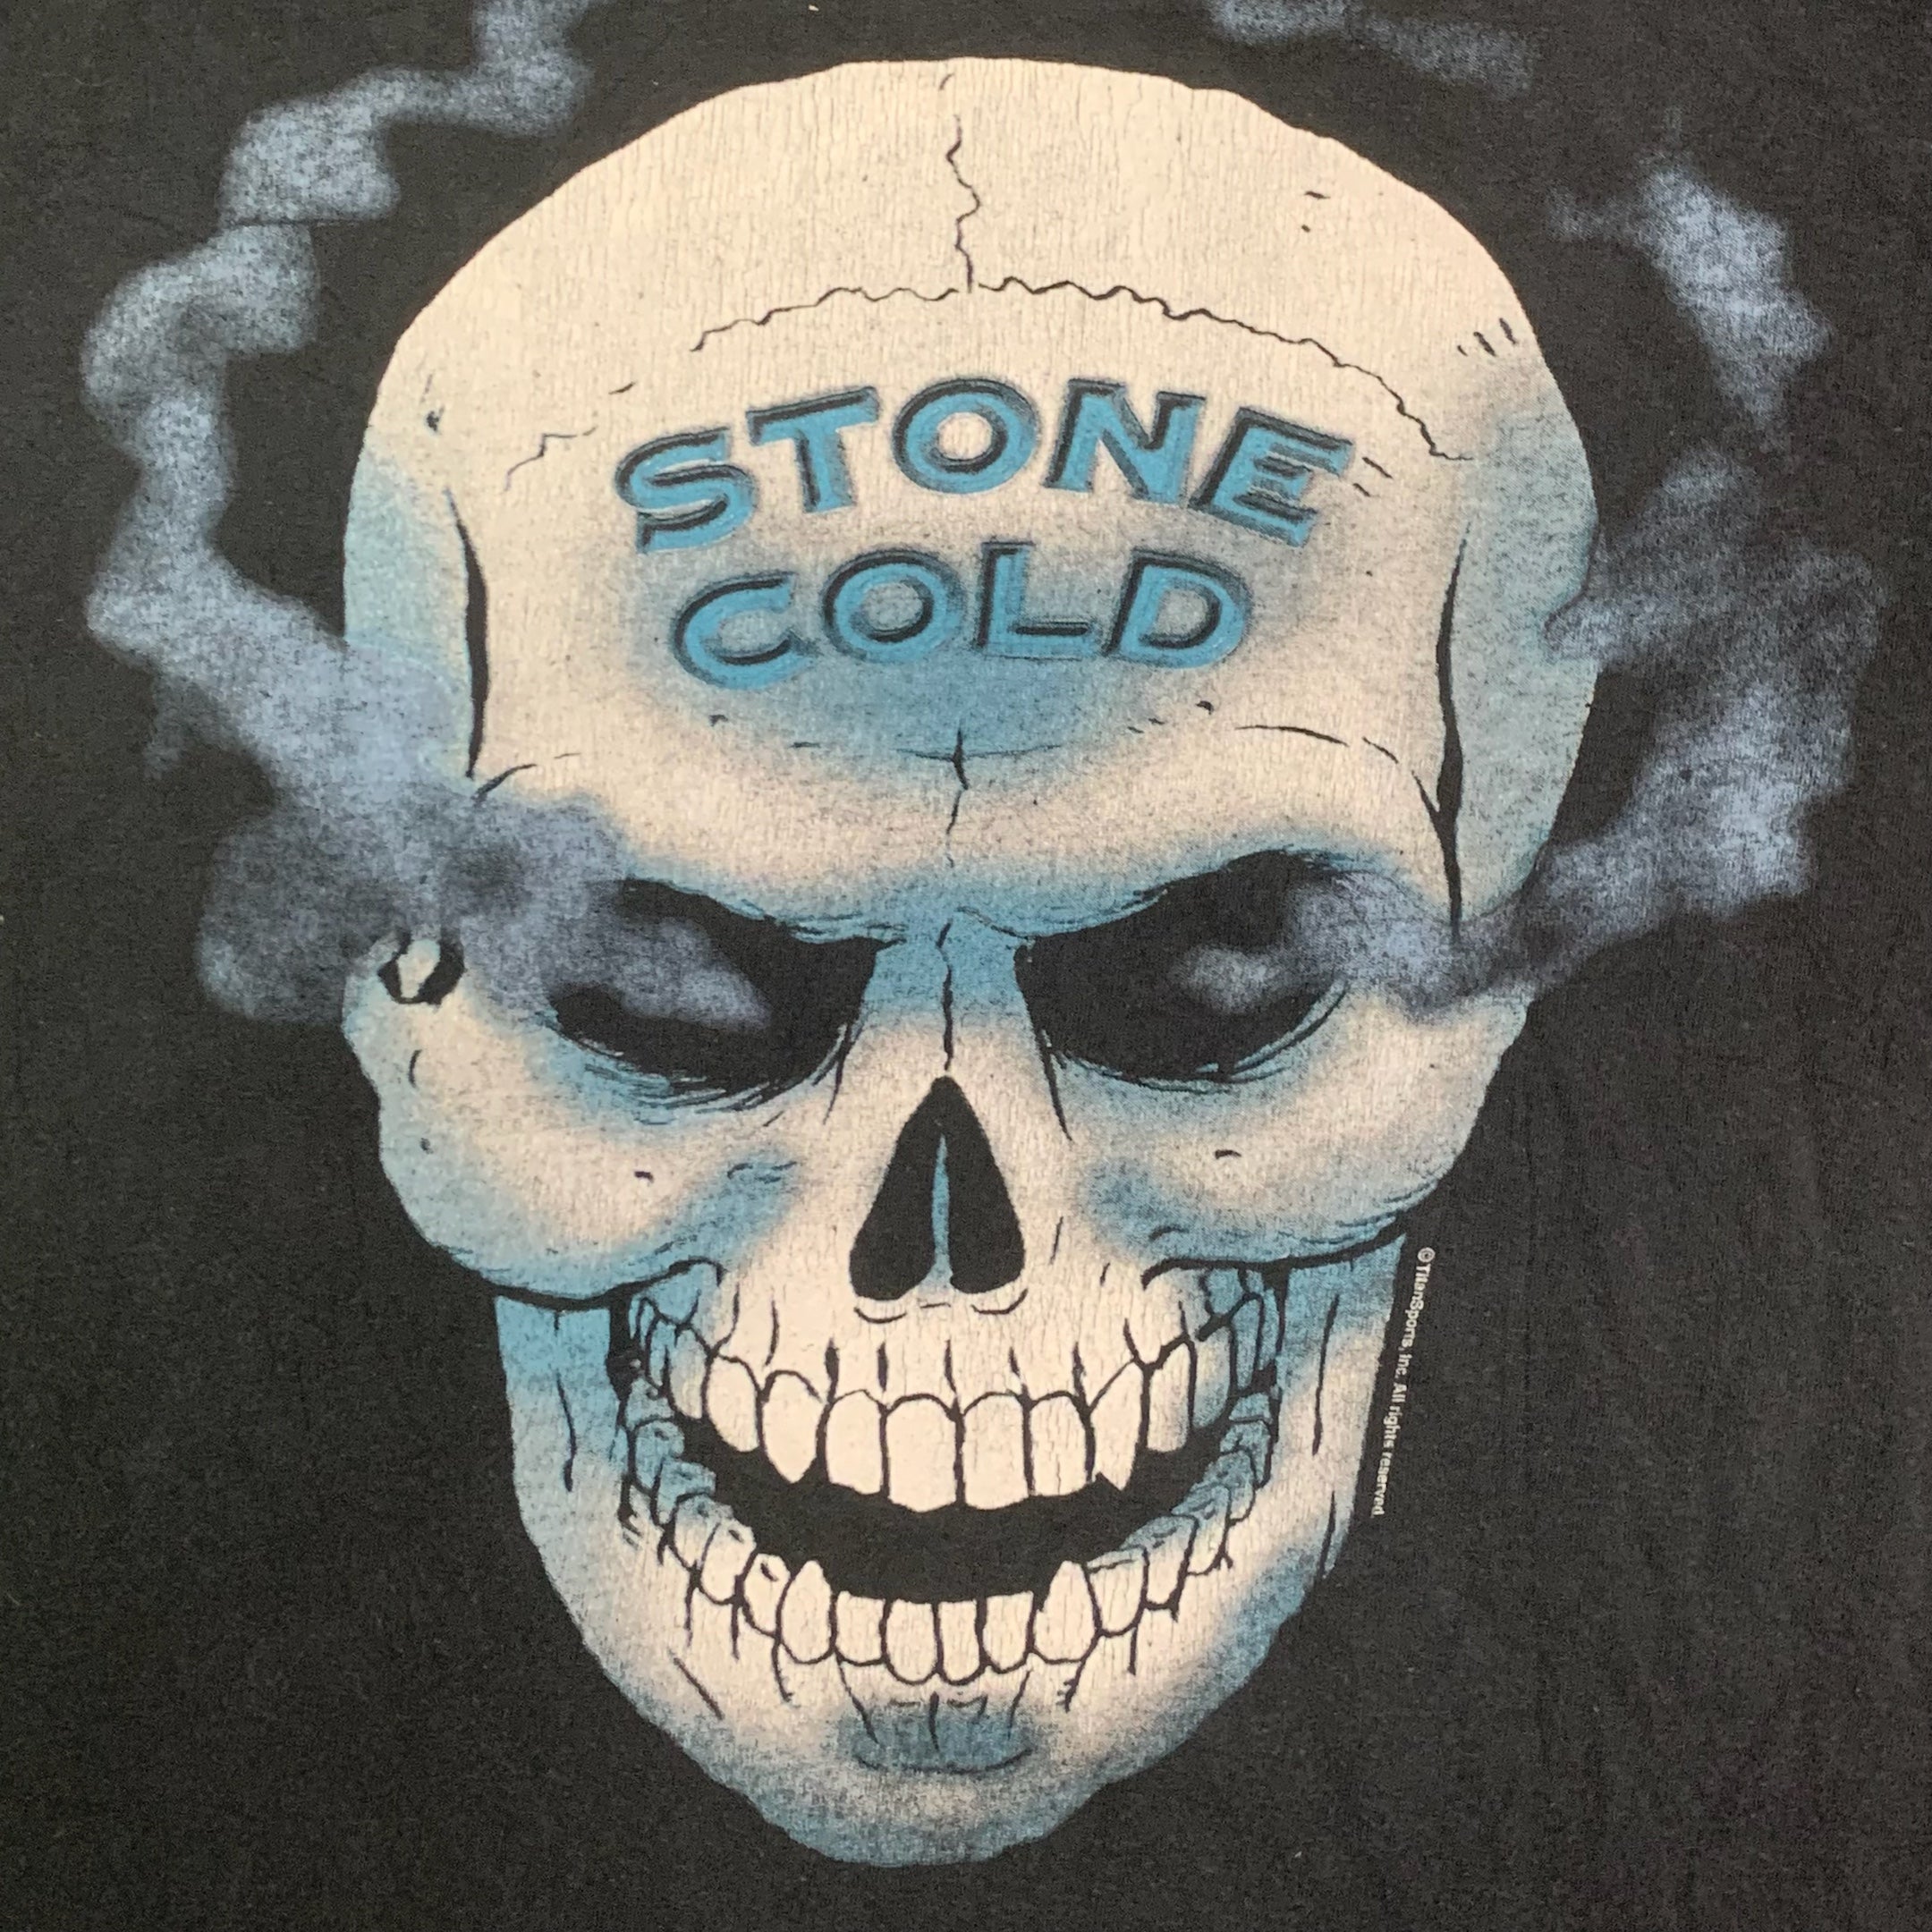 T-shirt Stone Cold Steve Austin